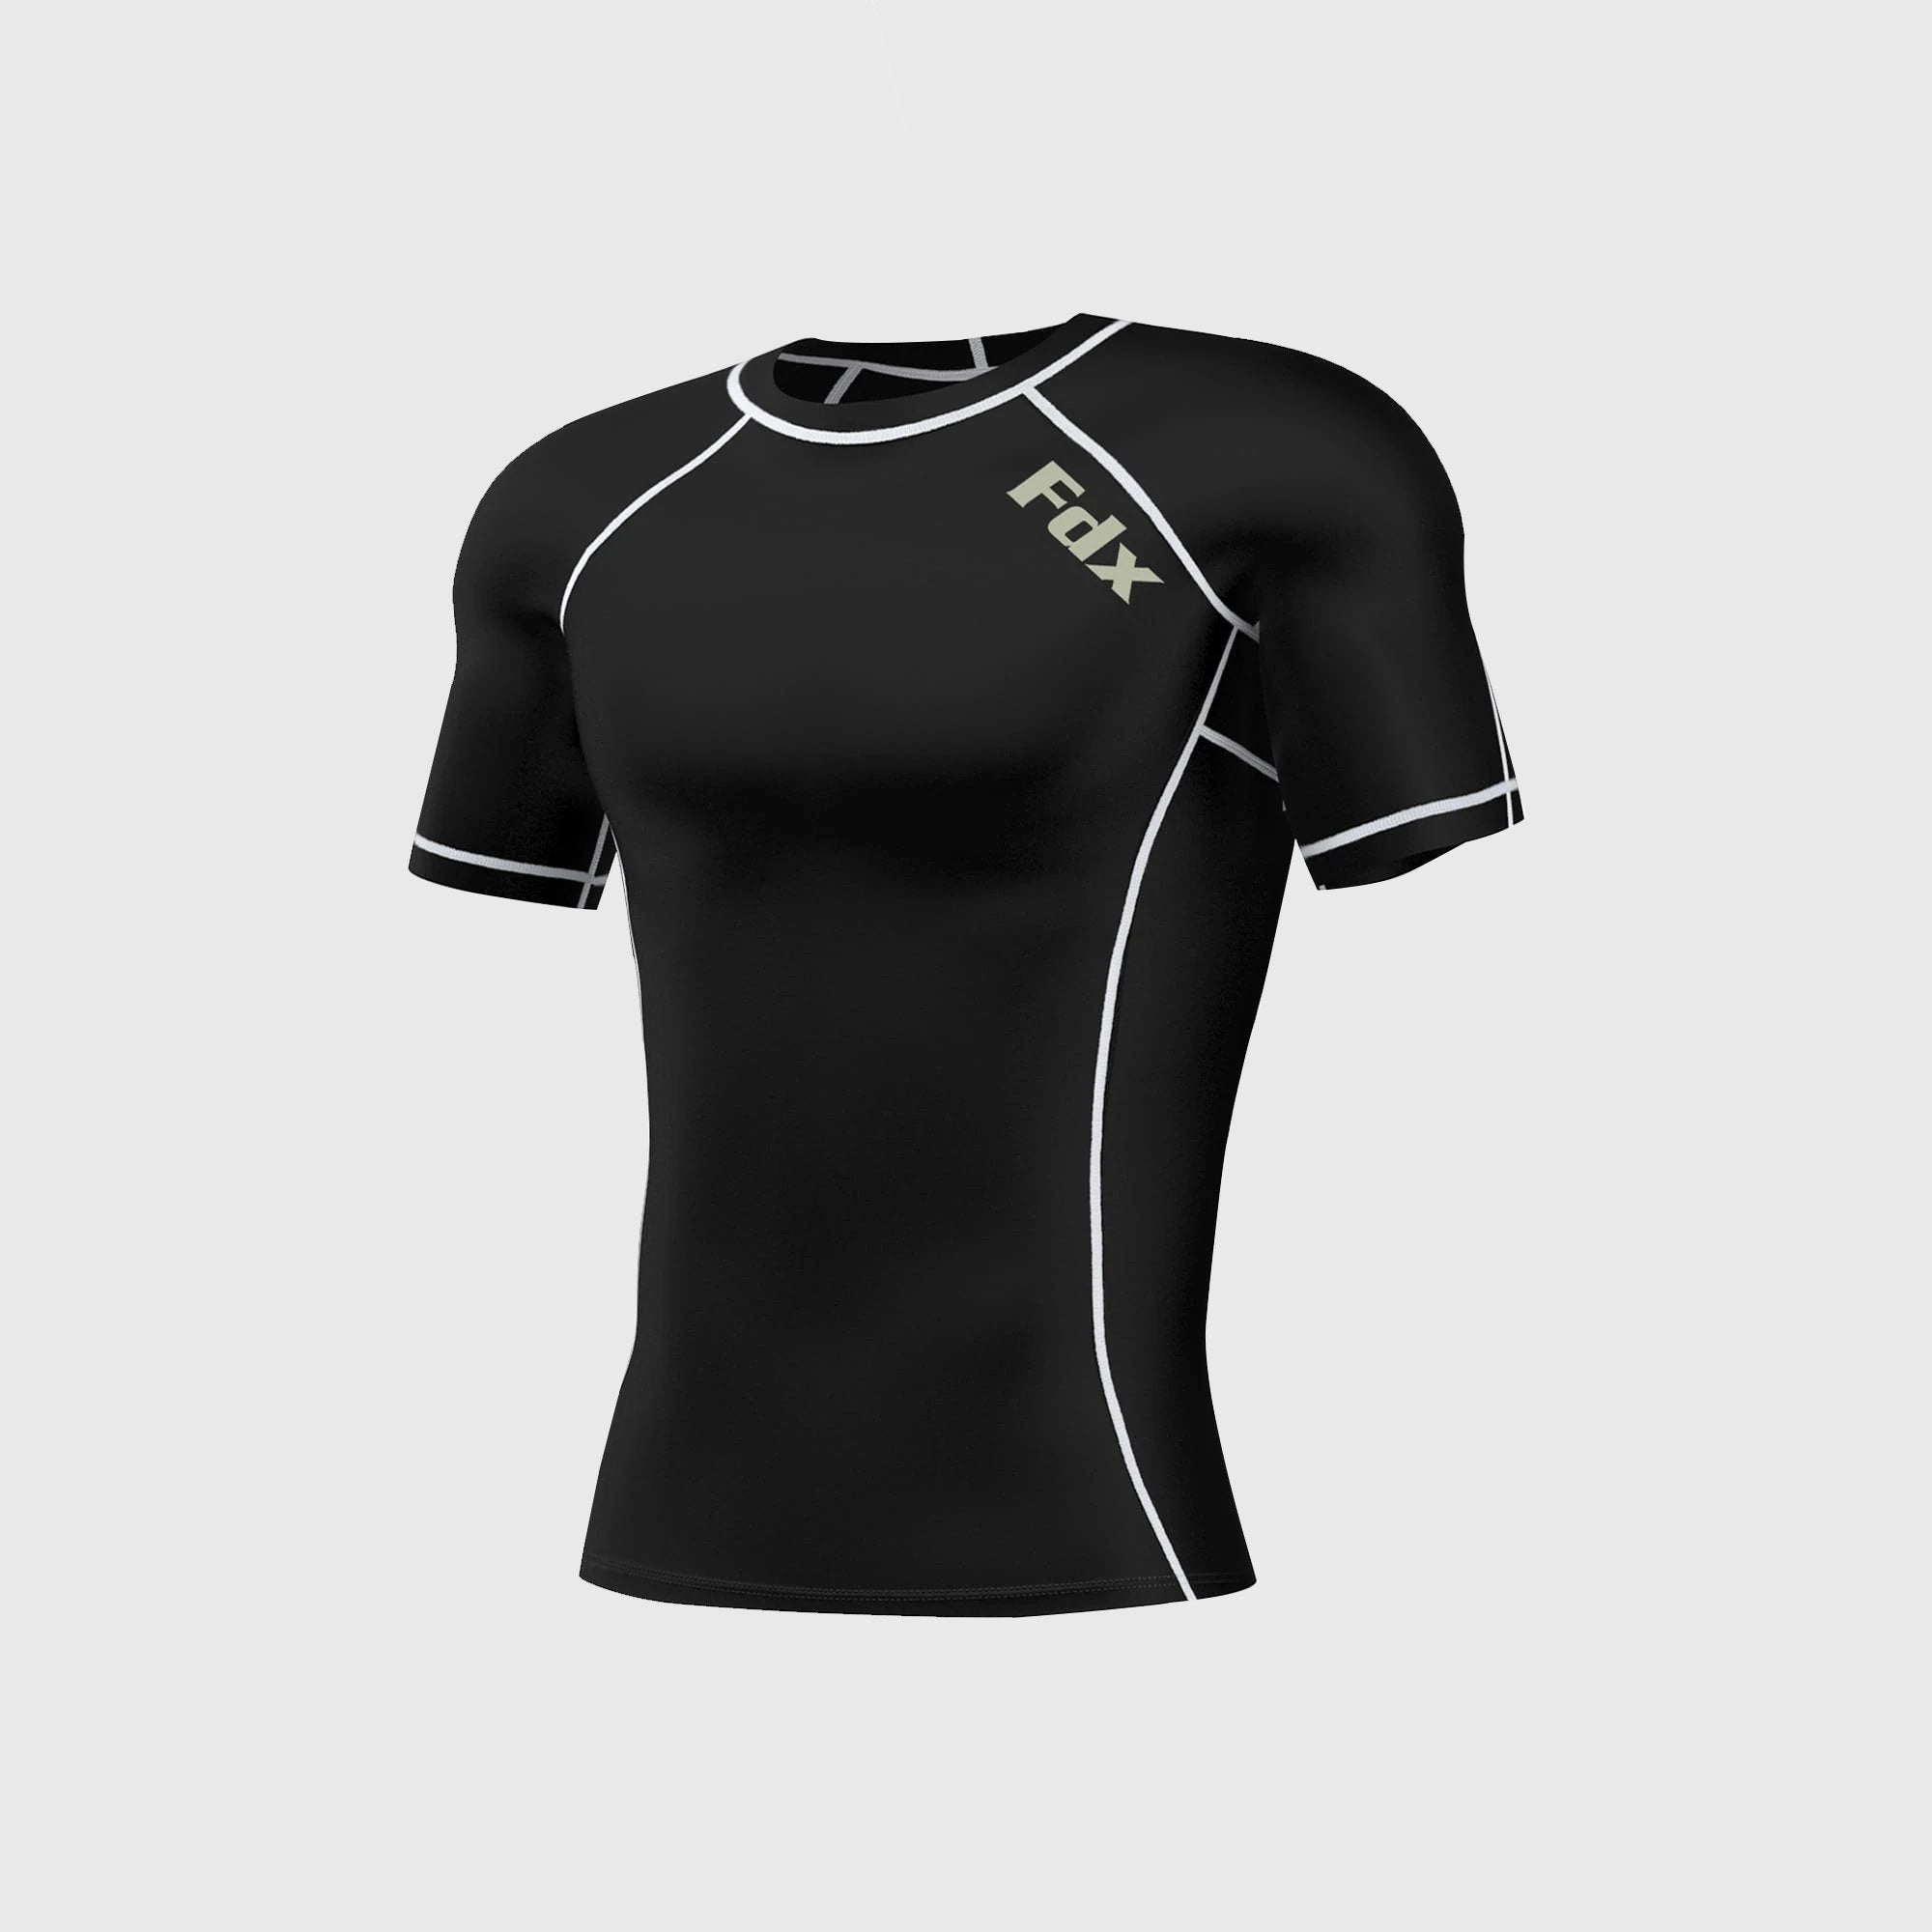 Fdx Cosmic Black / White Men's Short Sleeve Base Layer Gym Shirt